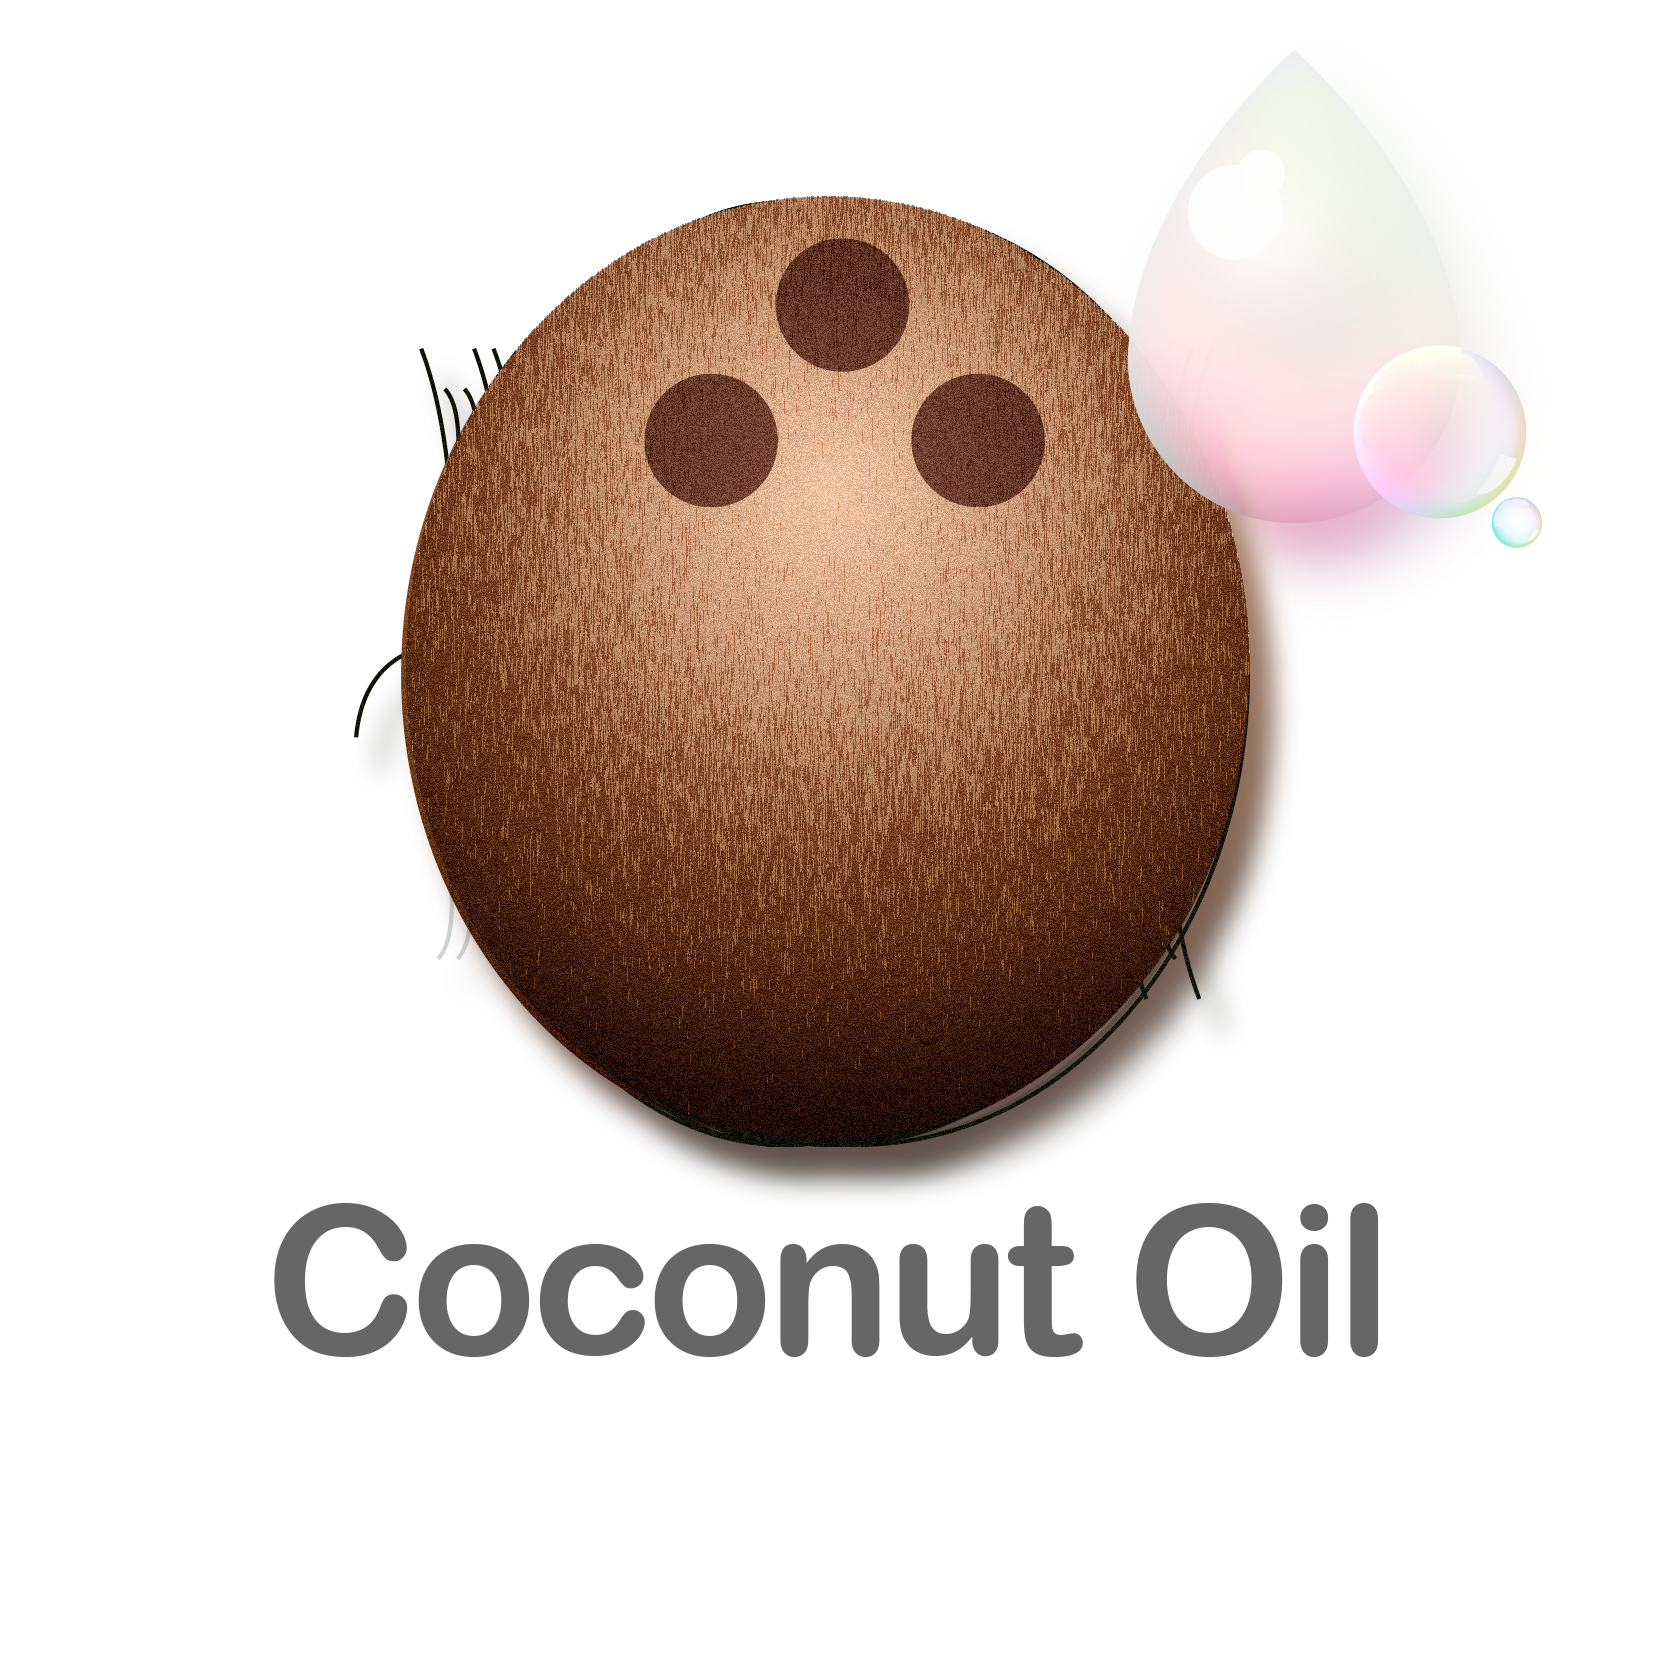 Coconut Oil (Copy) (Copy)